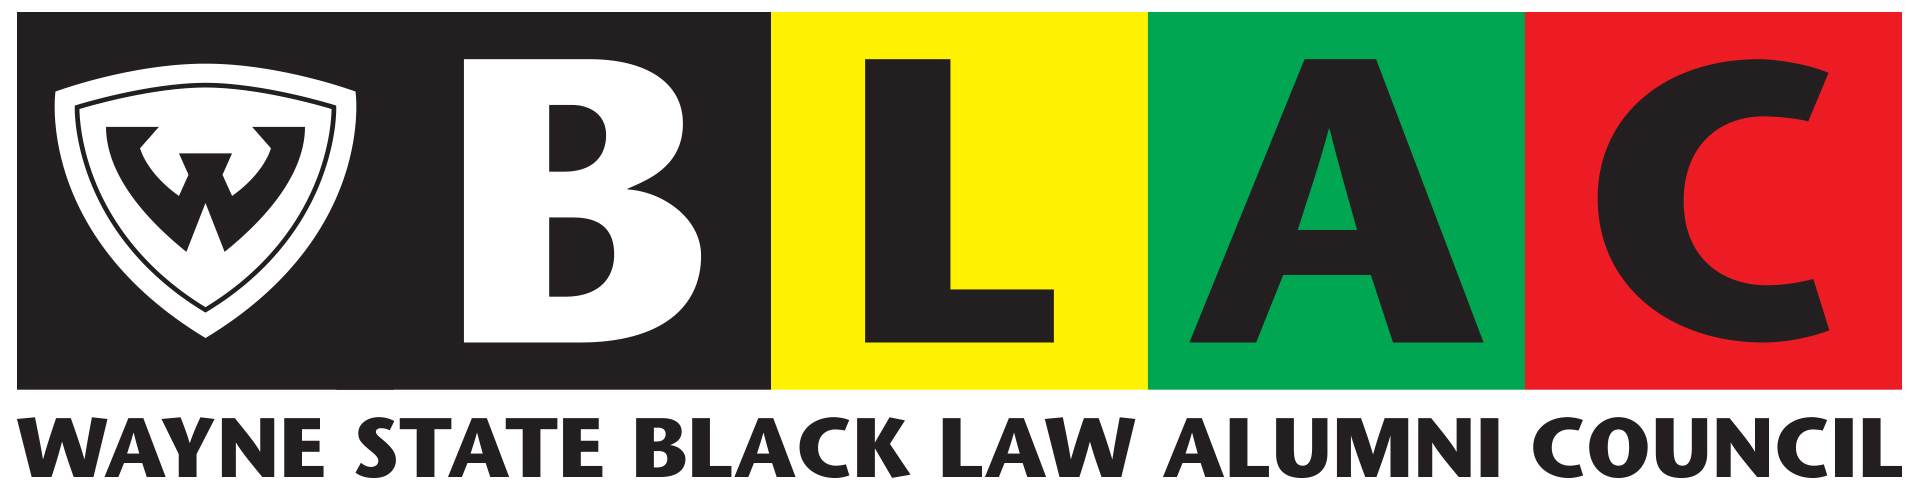 Black Law Alumni Council logo